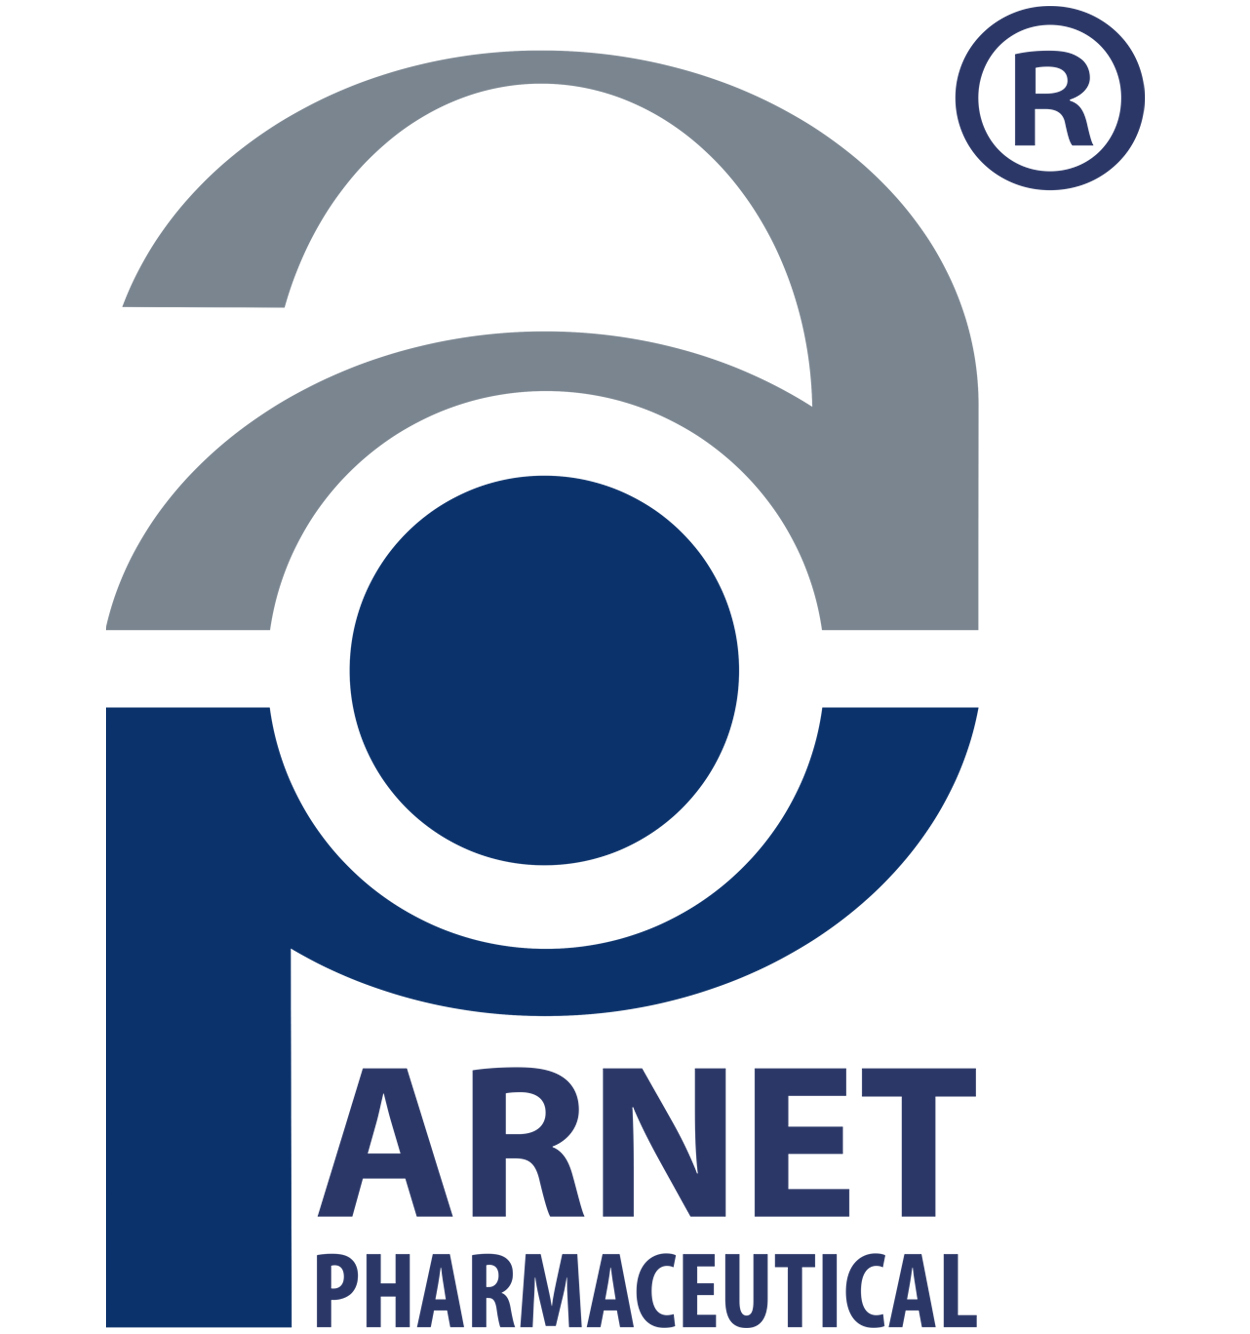 Arnet Pharmaceuticals